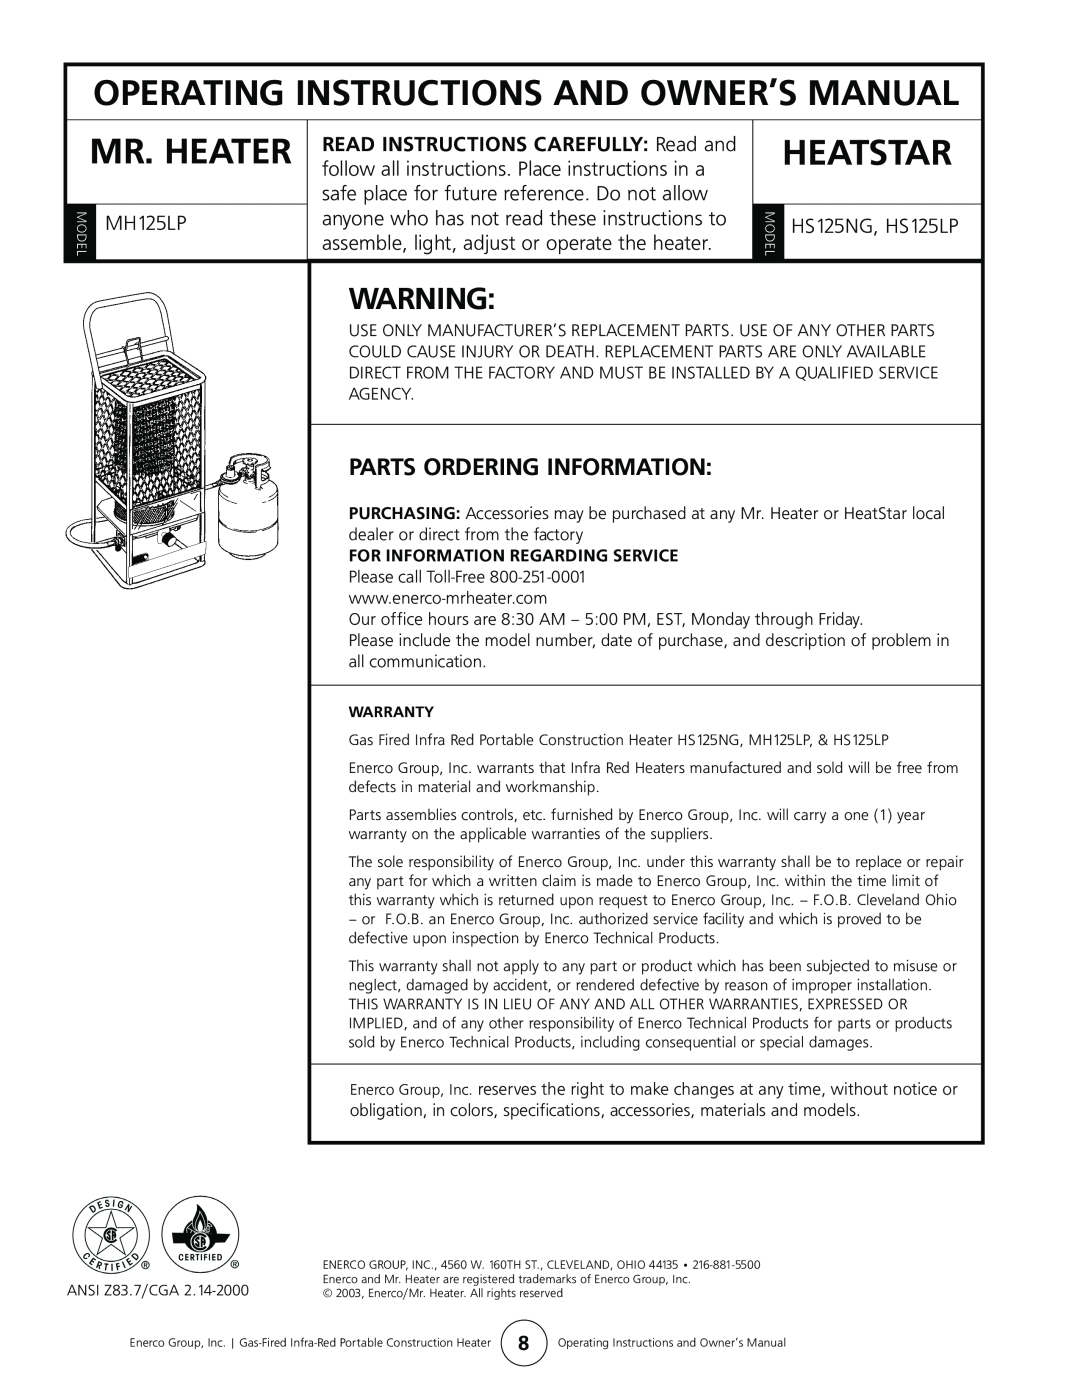 Mr. Heater operating instructions Parts Ordering Information, Mr. Heater, Heatstar, MH125LP, HS125NG, HS125LP 